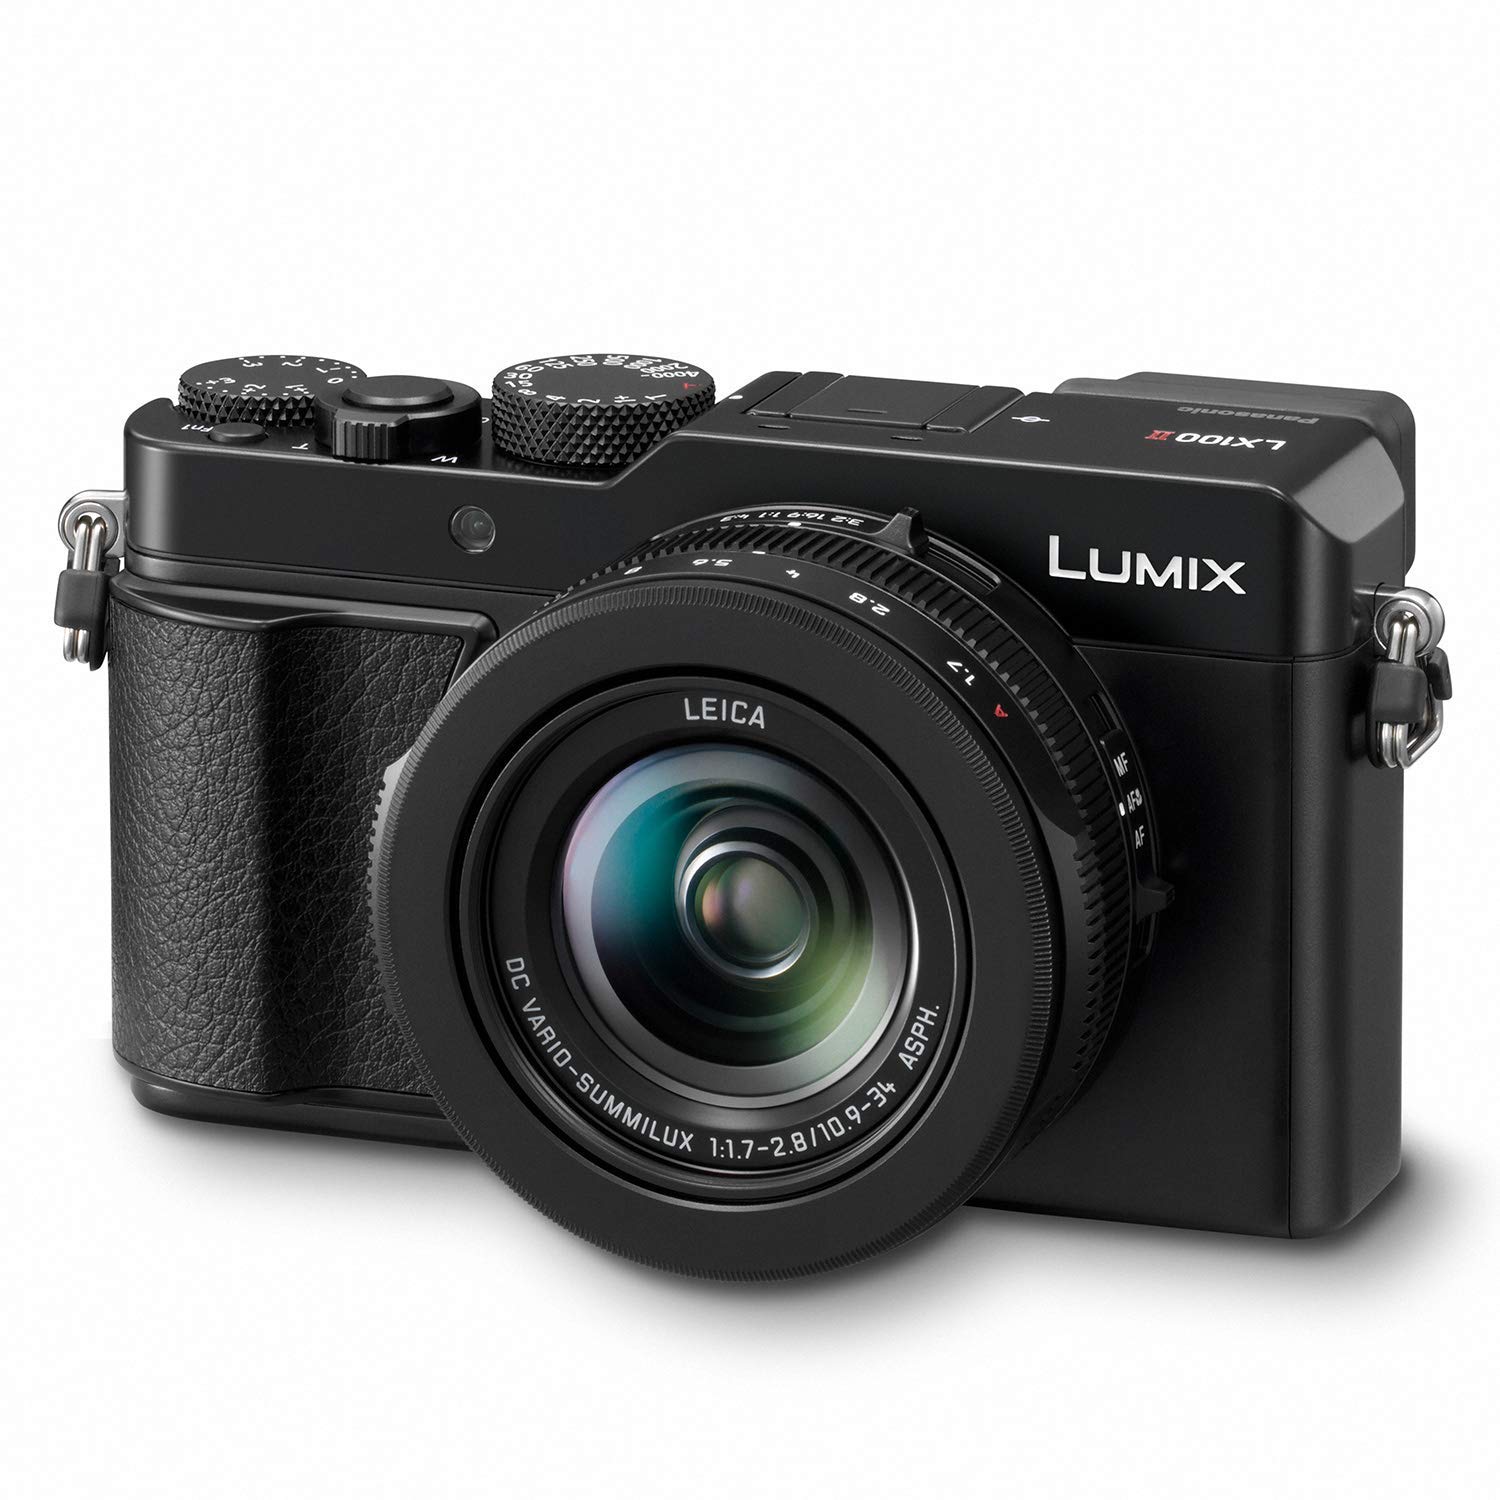 Panasonic Lumix LX 100 II